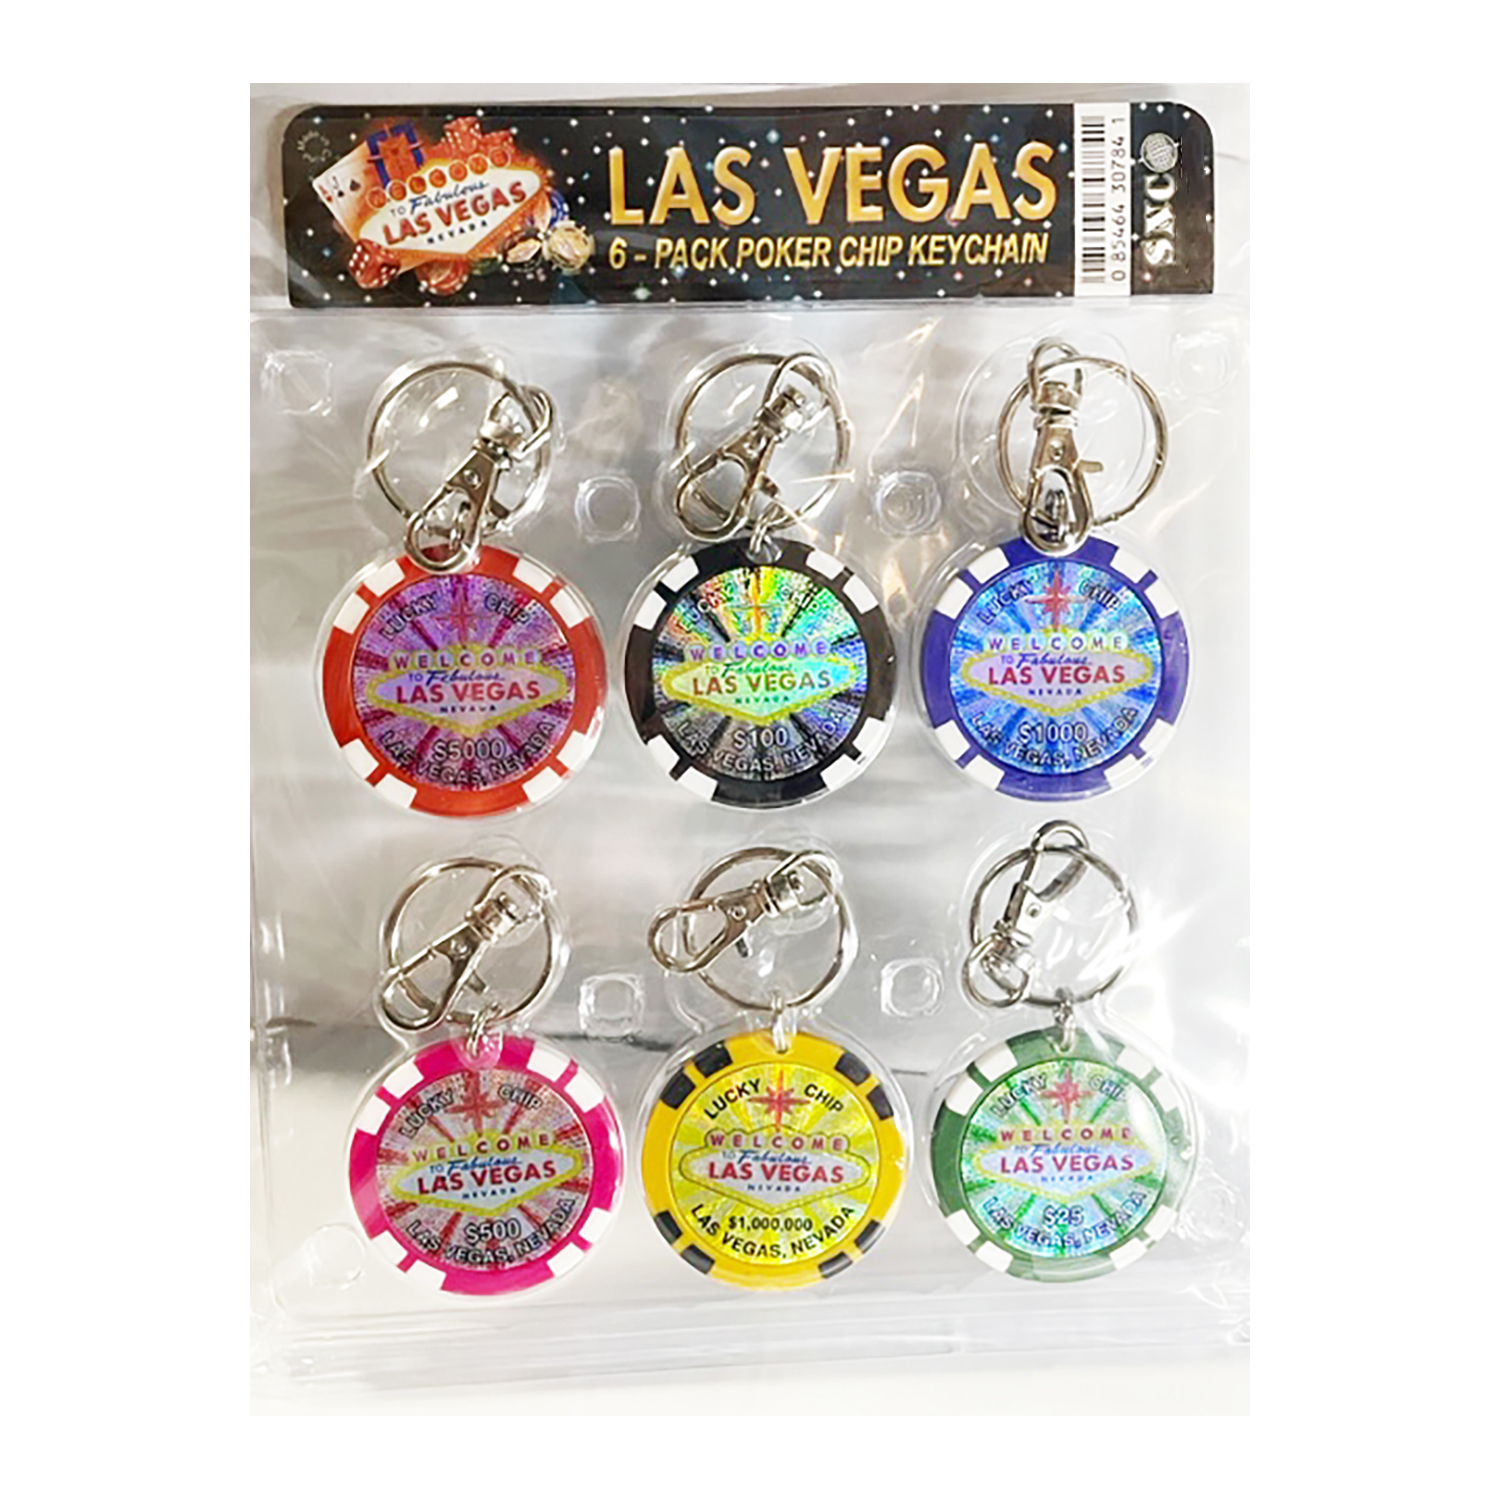 Las Vegas Porker Chip Assorted Keychains - Set of 6